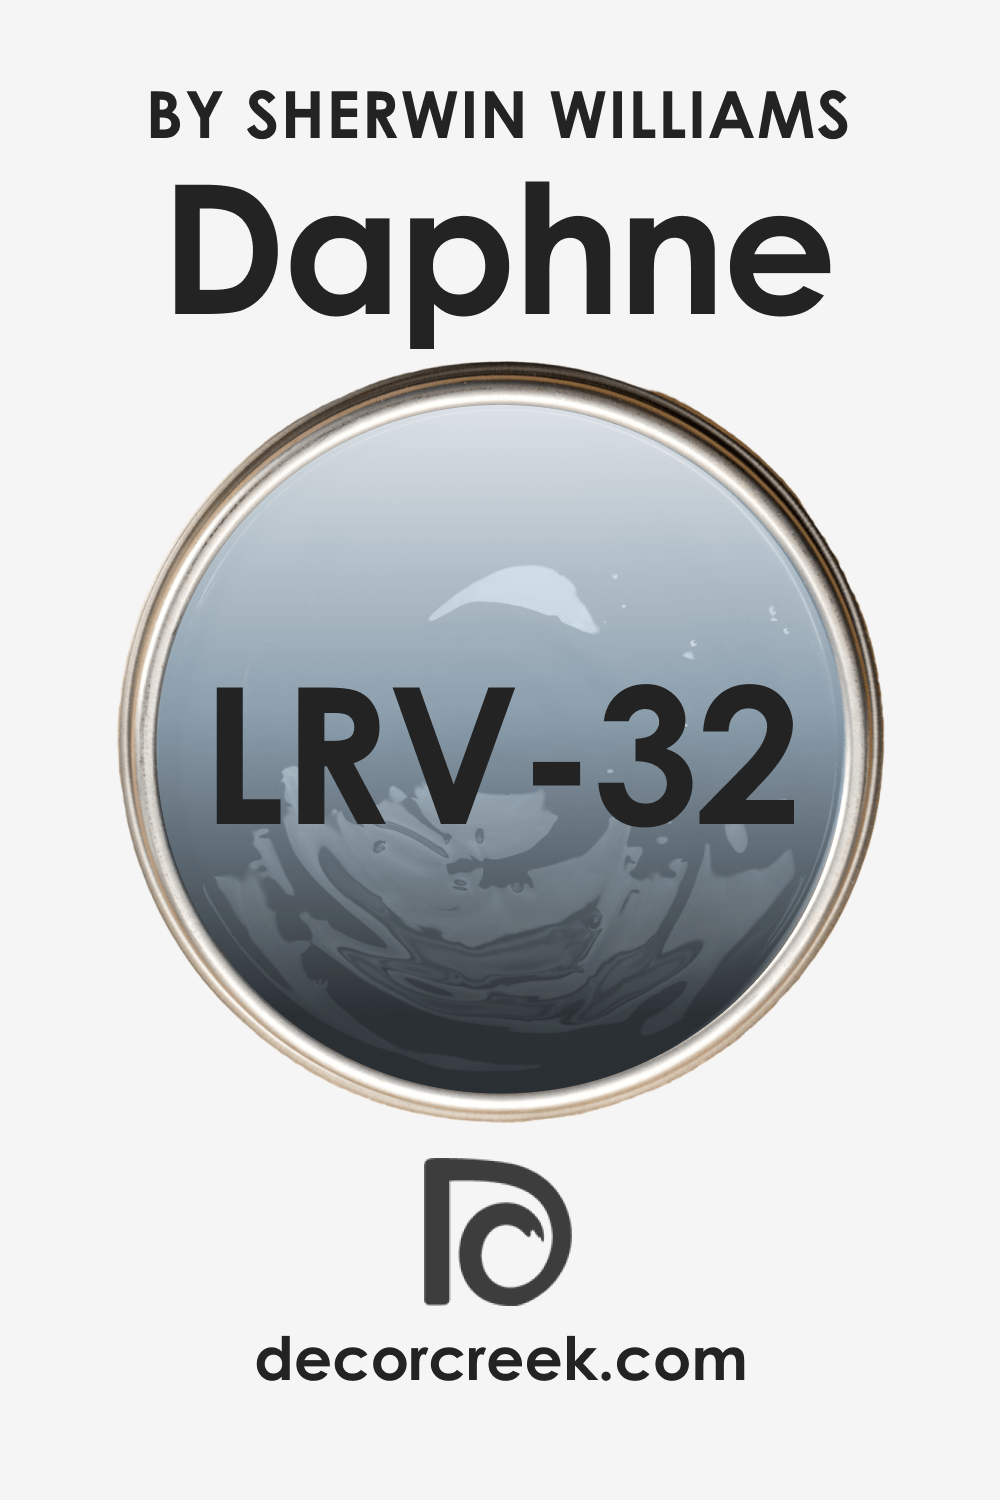 LRV of Daphne SW-9151